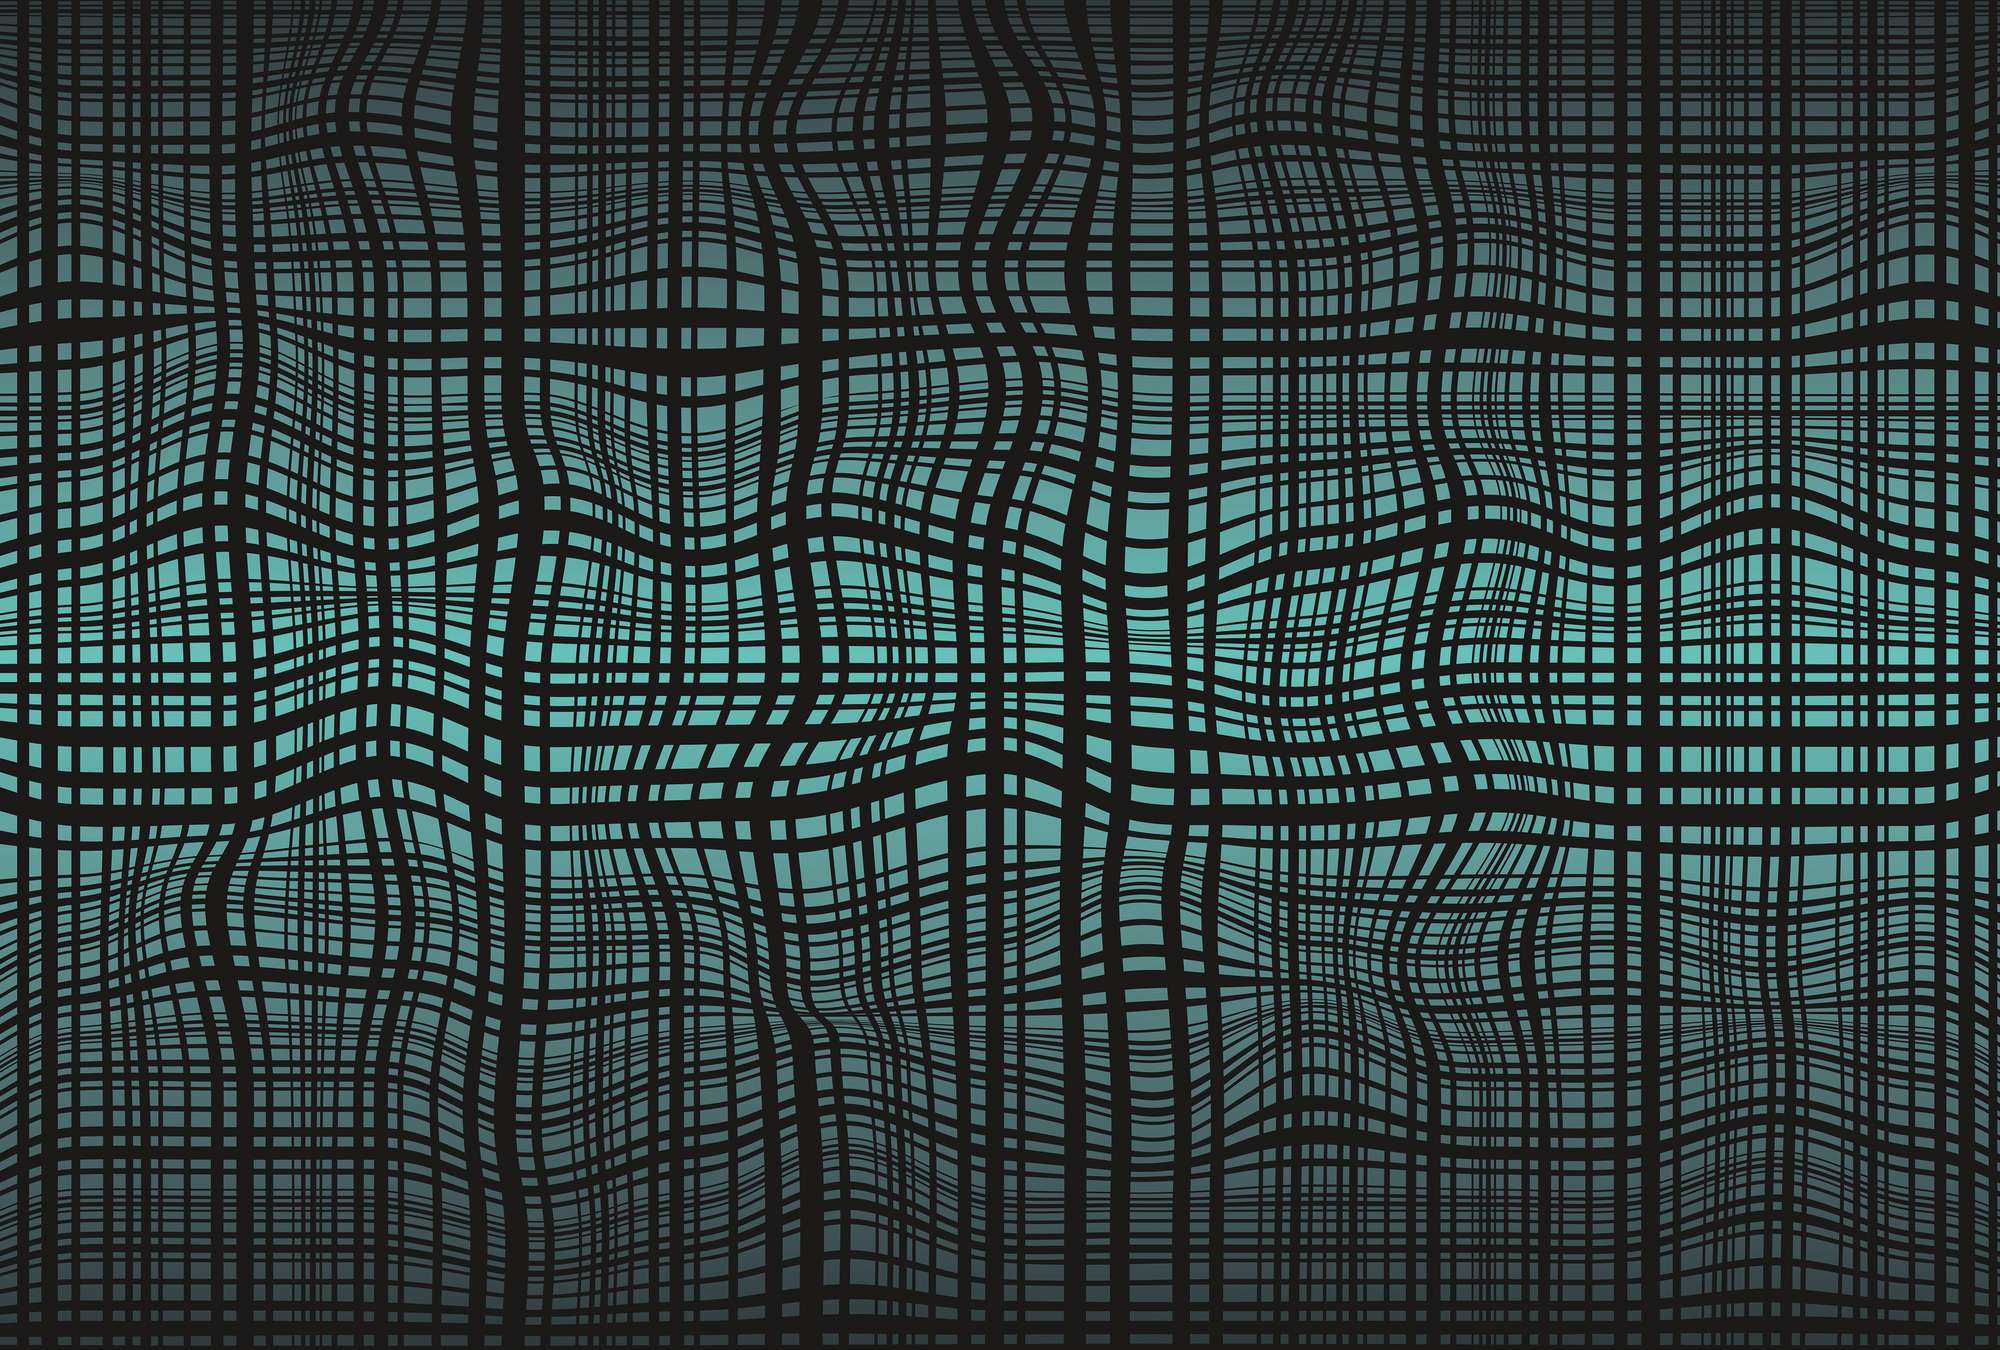             3D-Fototapete mit Wellenförmigen Liniendesign
        